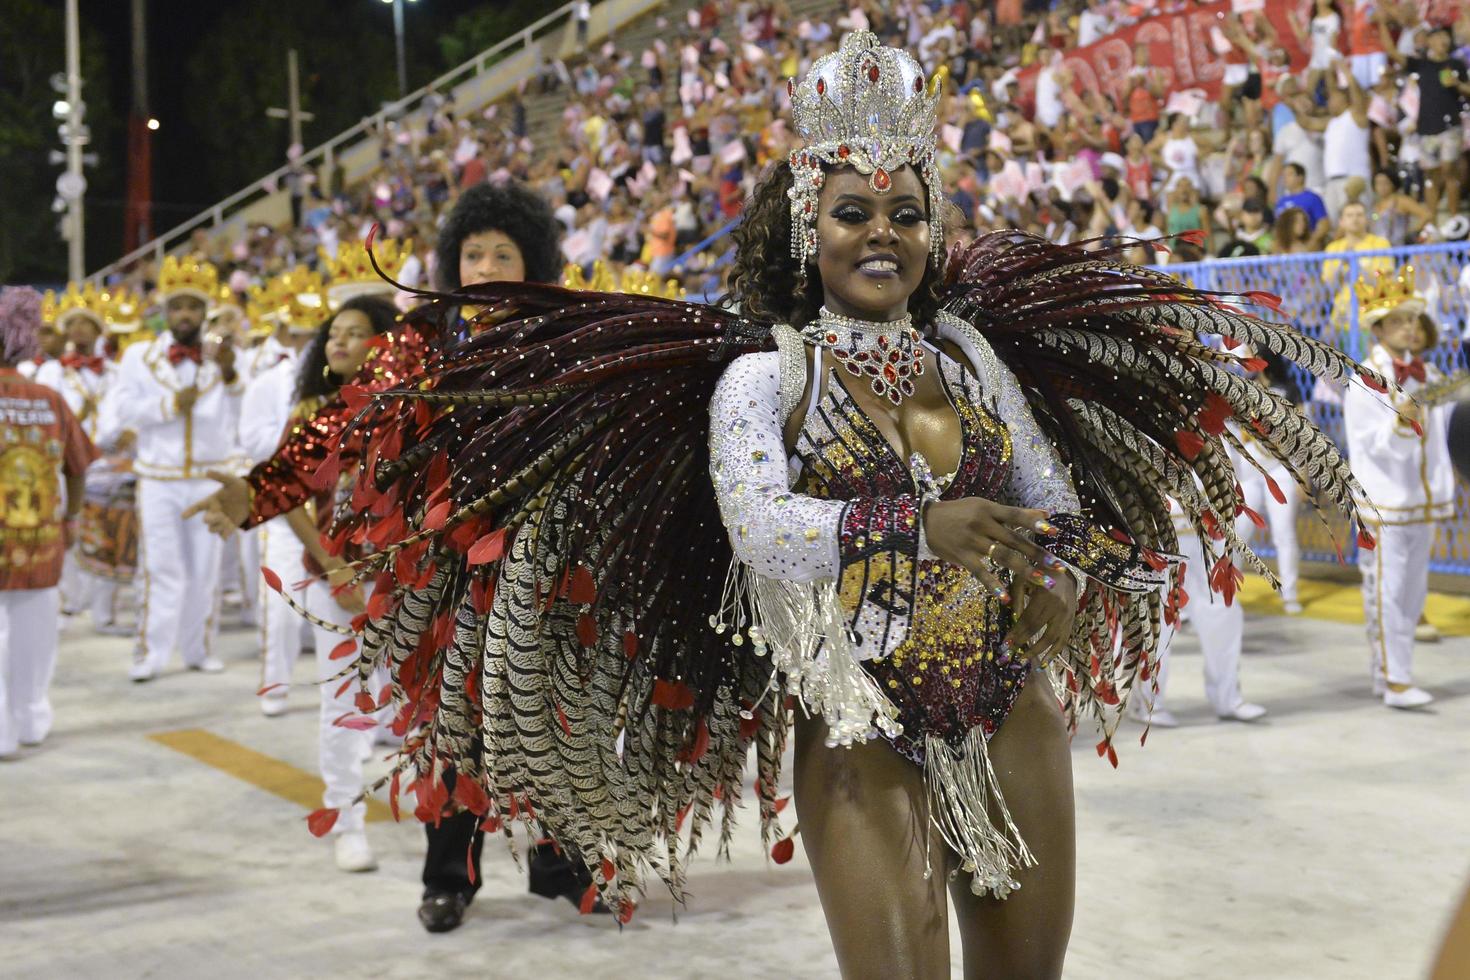 rio de janeiro, rj brazil - 09 de febrero de 2018 - desfile de la escuela de samba en el sambodromo. unidos do porto da pedra durante el festival en la calle marques de sapucai. foto